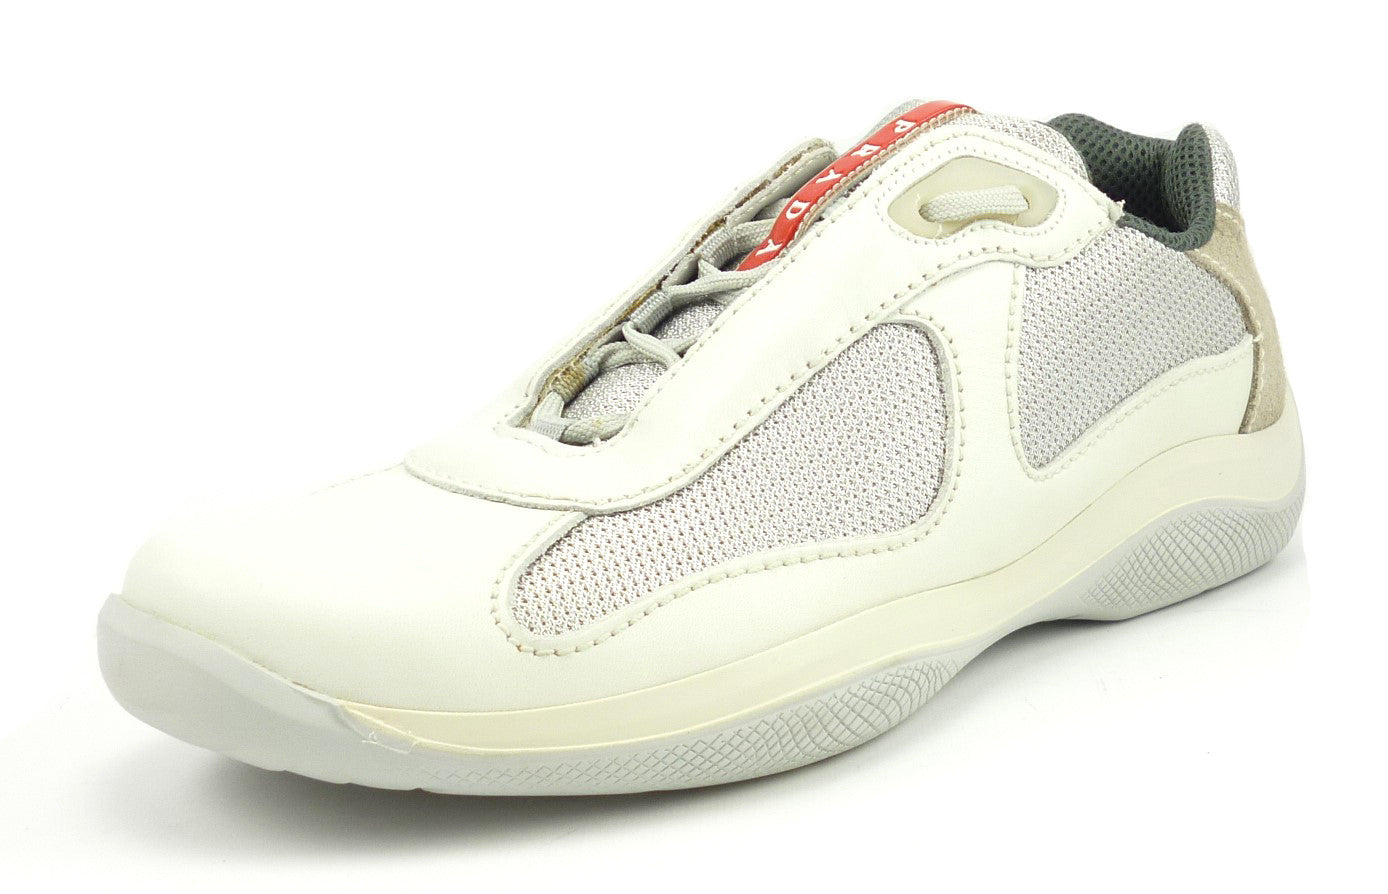 prada men's tennis shoes